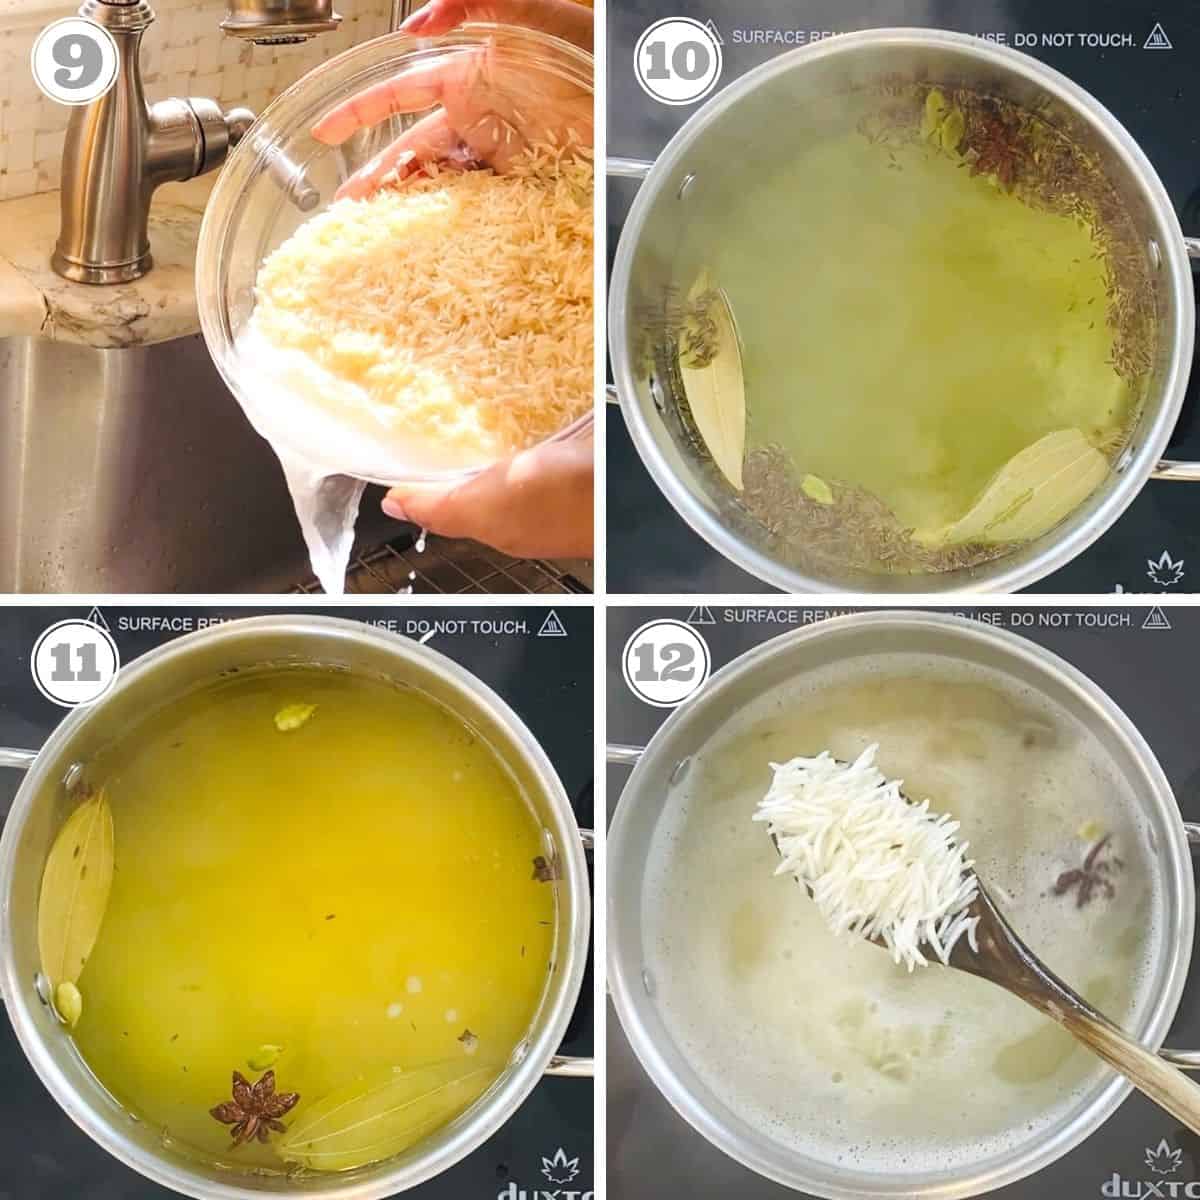 photos nine through twelve showing how to parboil rice for biryani 